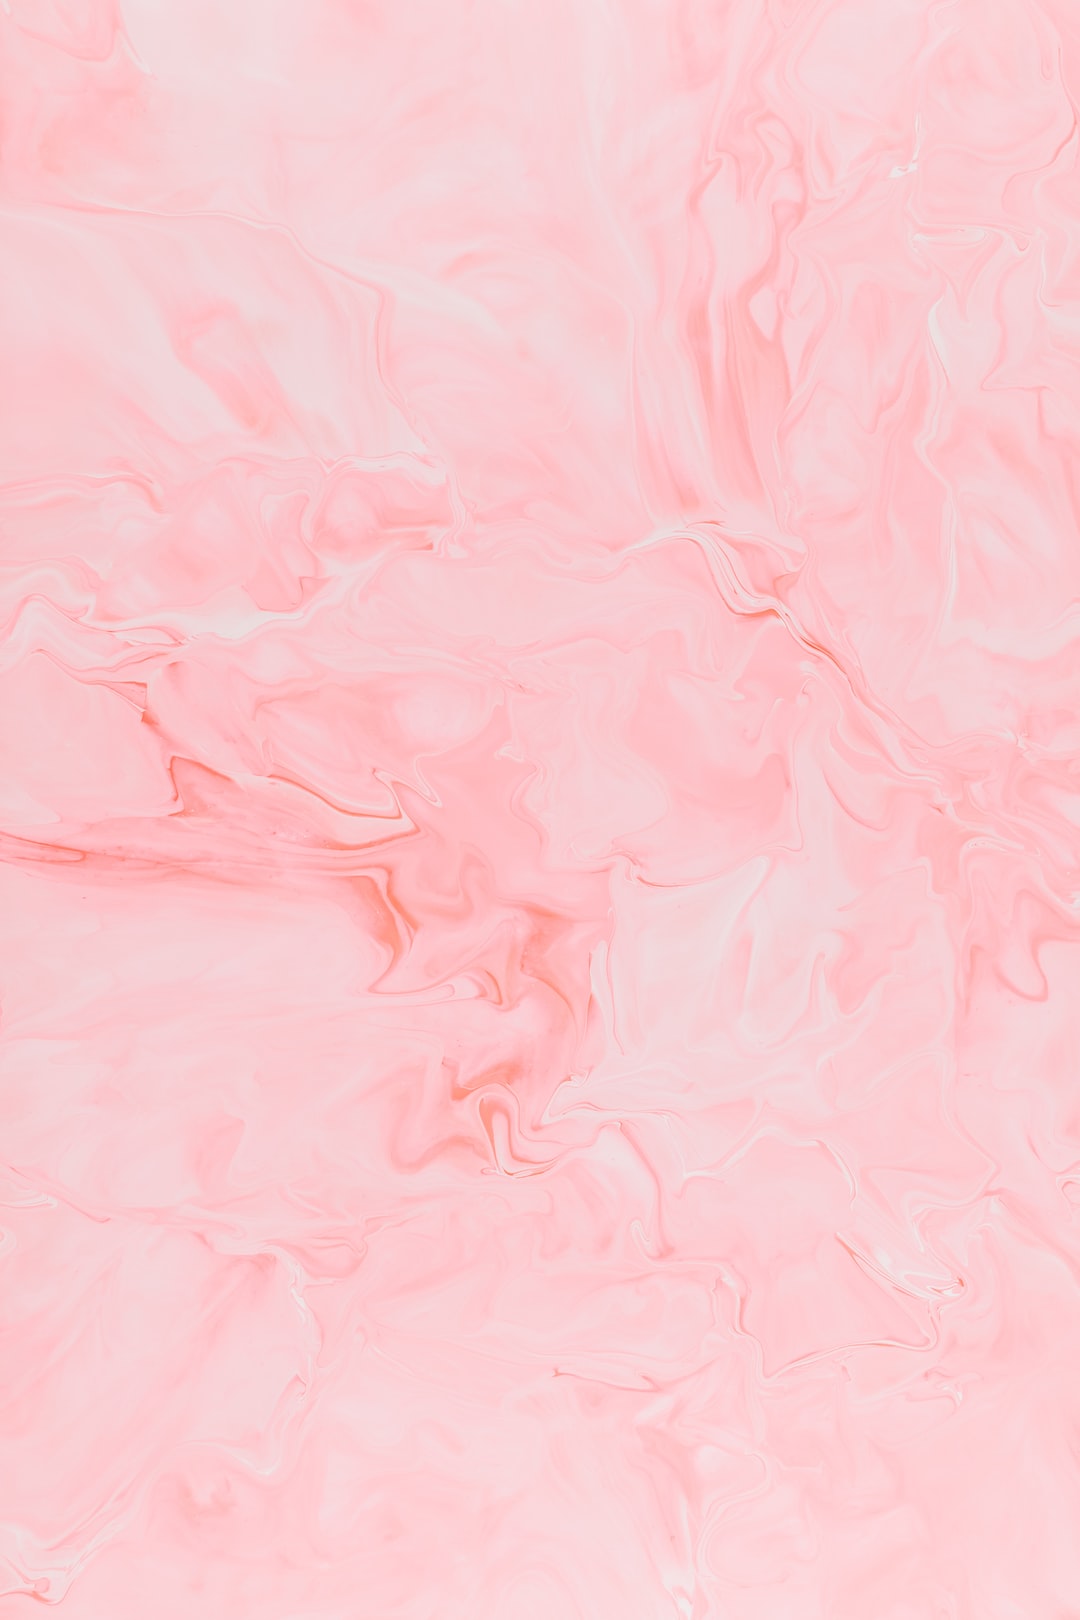 Cute Pink Wallpaper For Iphone - KibrisPDR